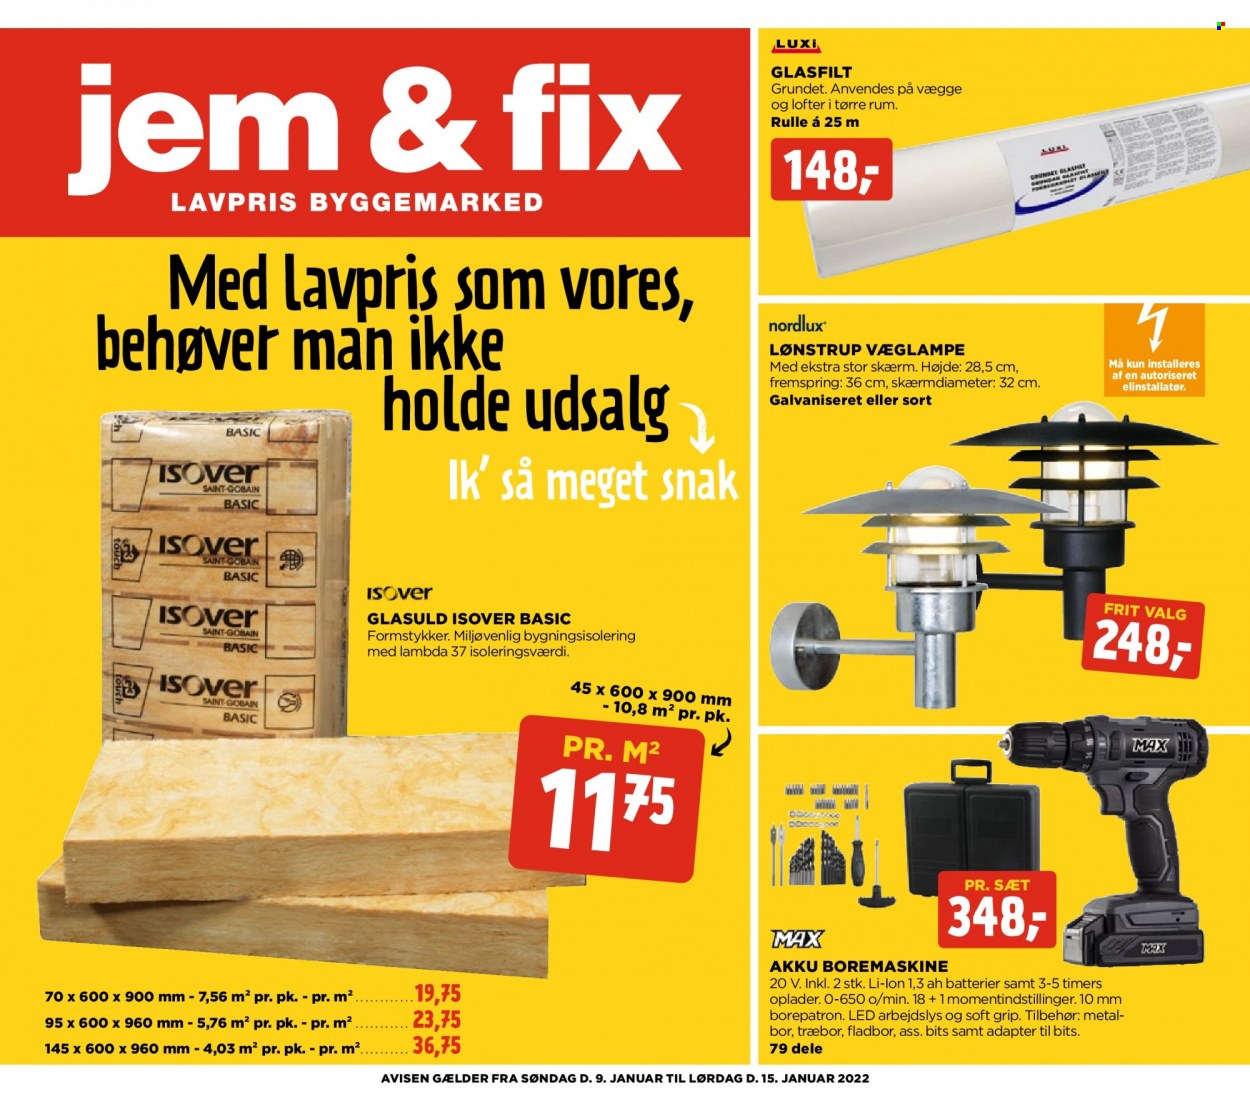 Jem & Fix tilbudsavis  - 09.01.2022 - 15.01.2022. Side 1.